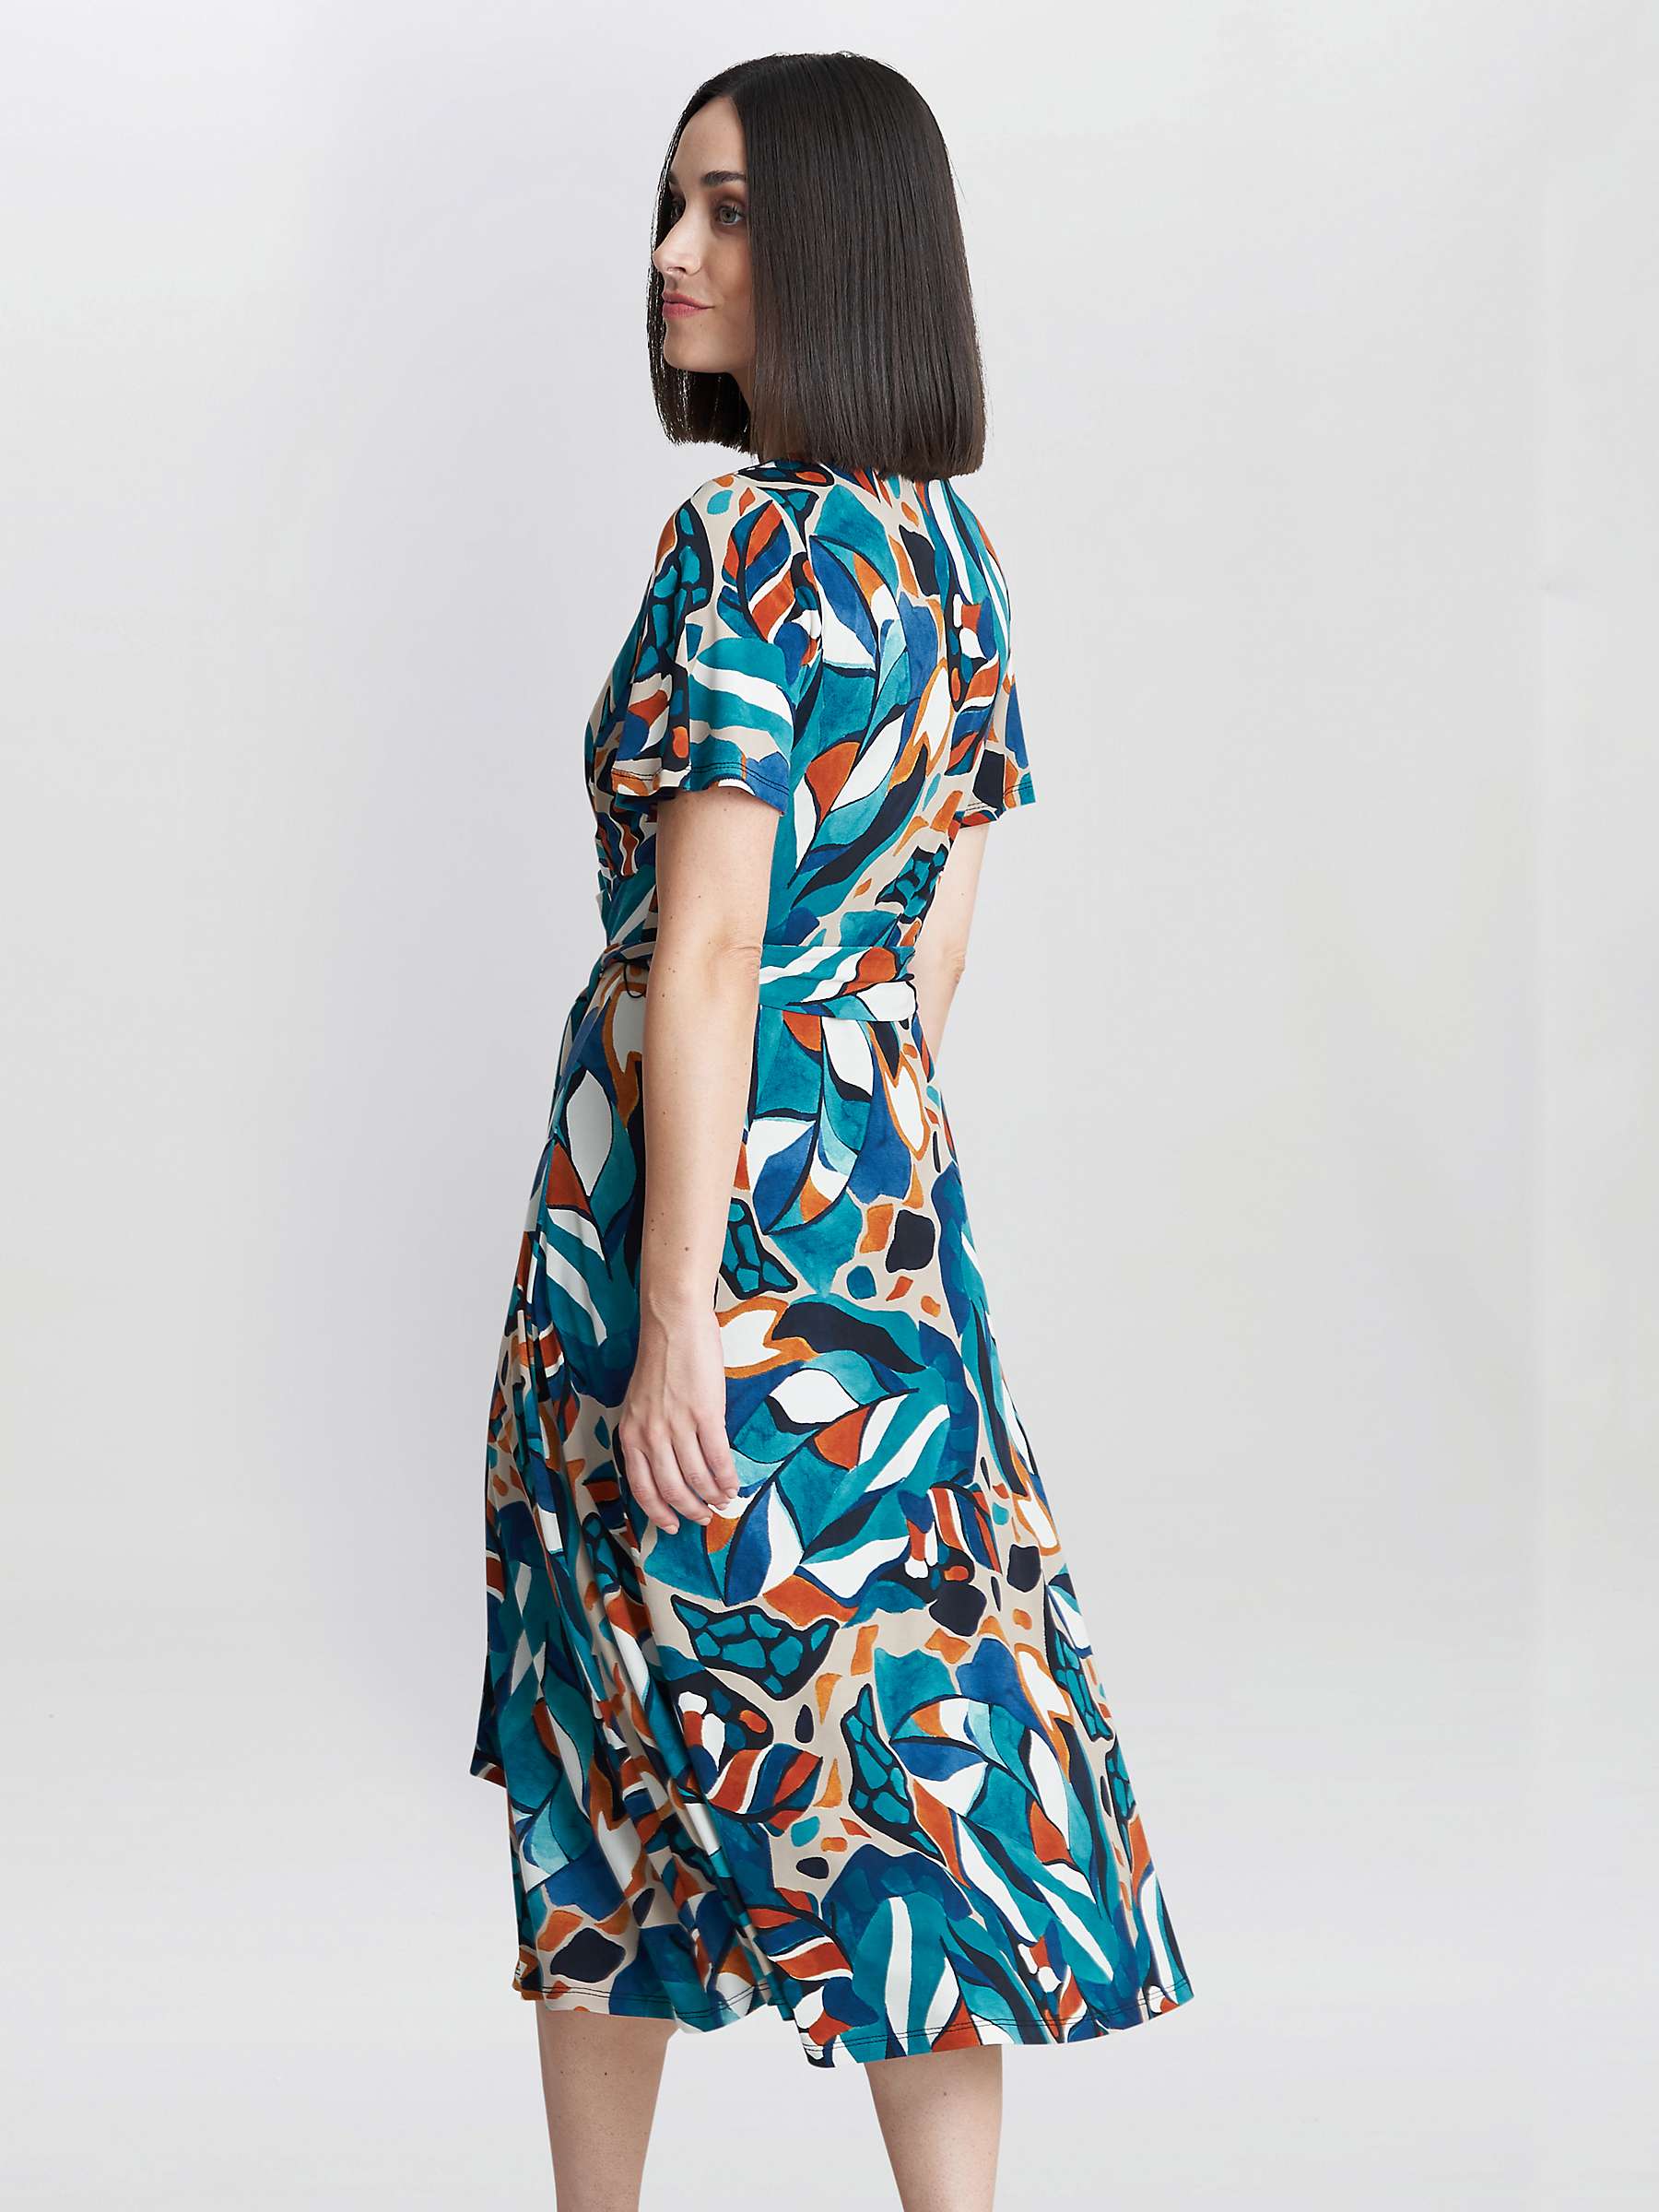 Buy Gina Bacconi Eloise Dress, Turquoise/Beige Online at johnlewis.com